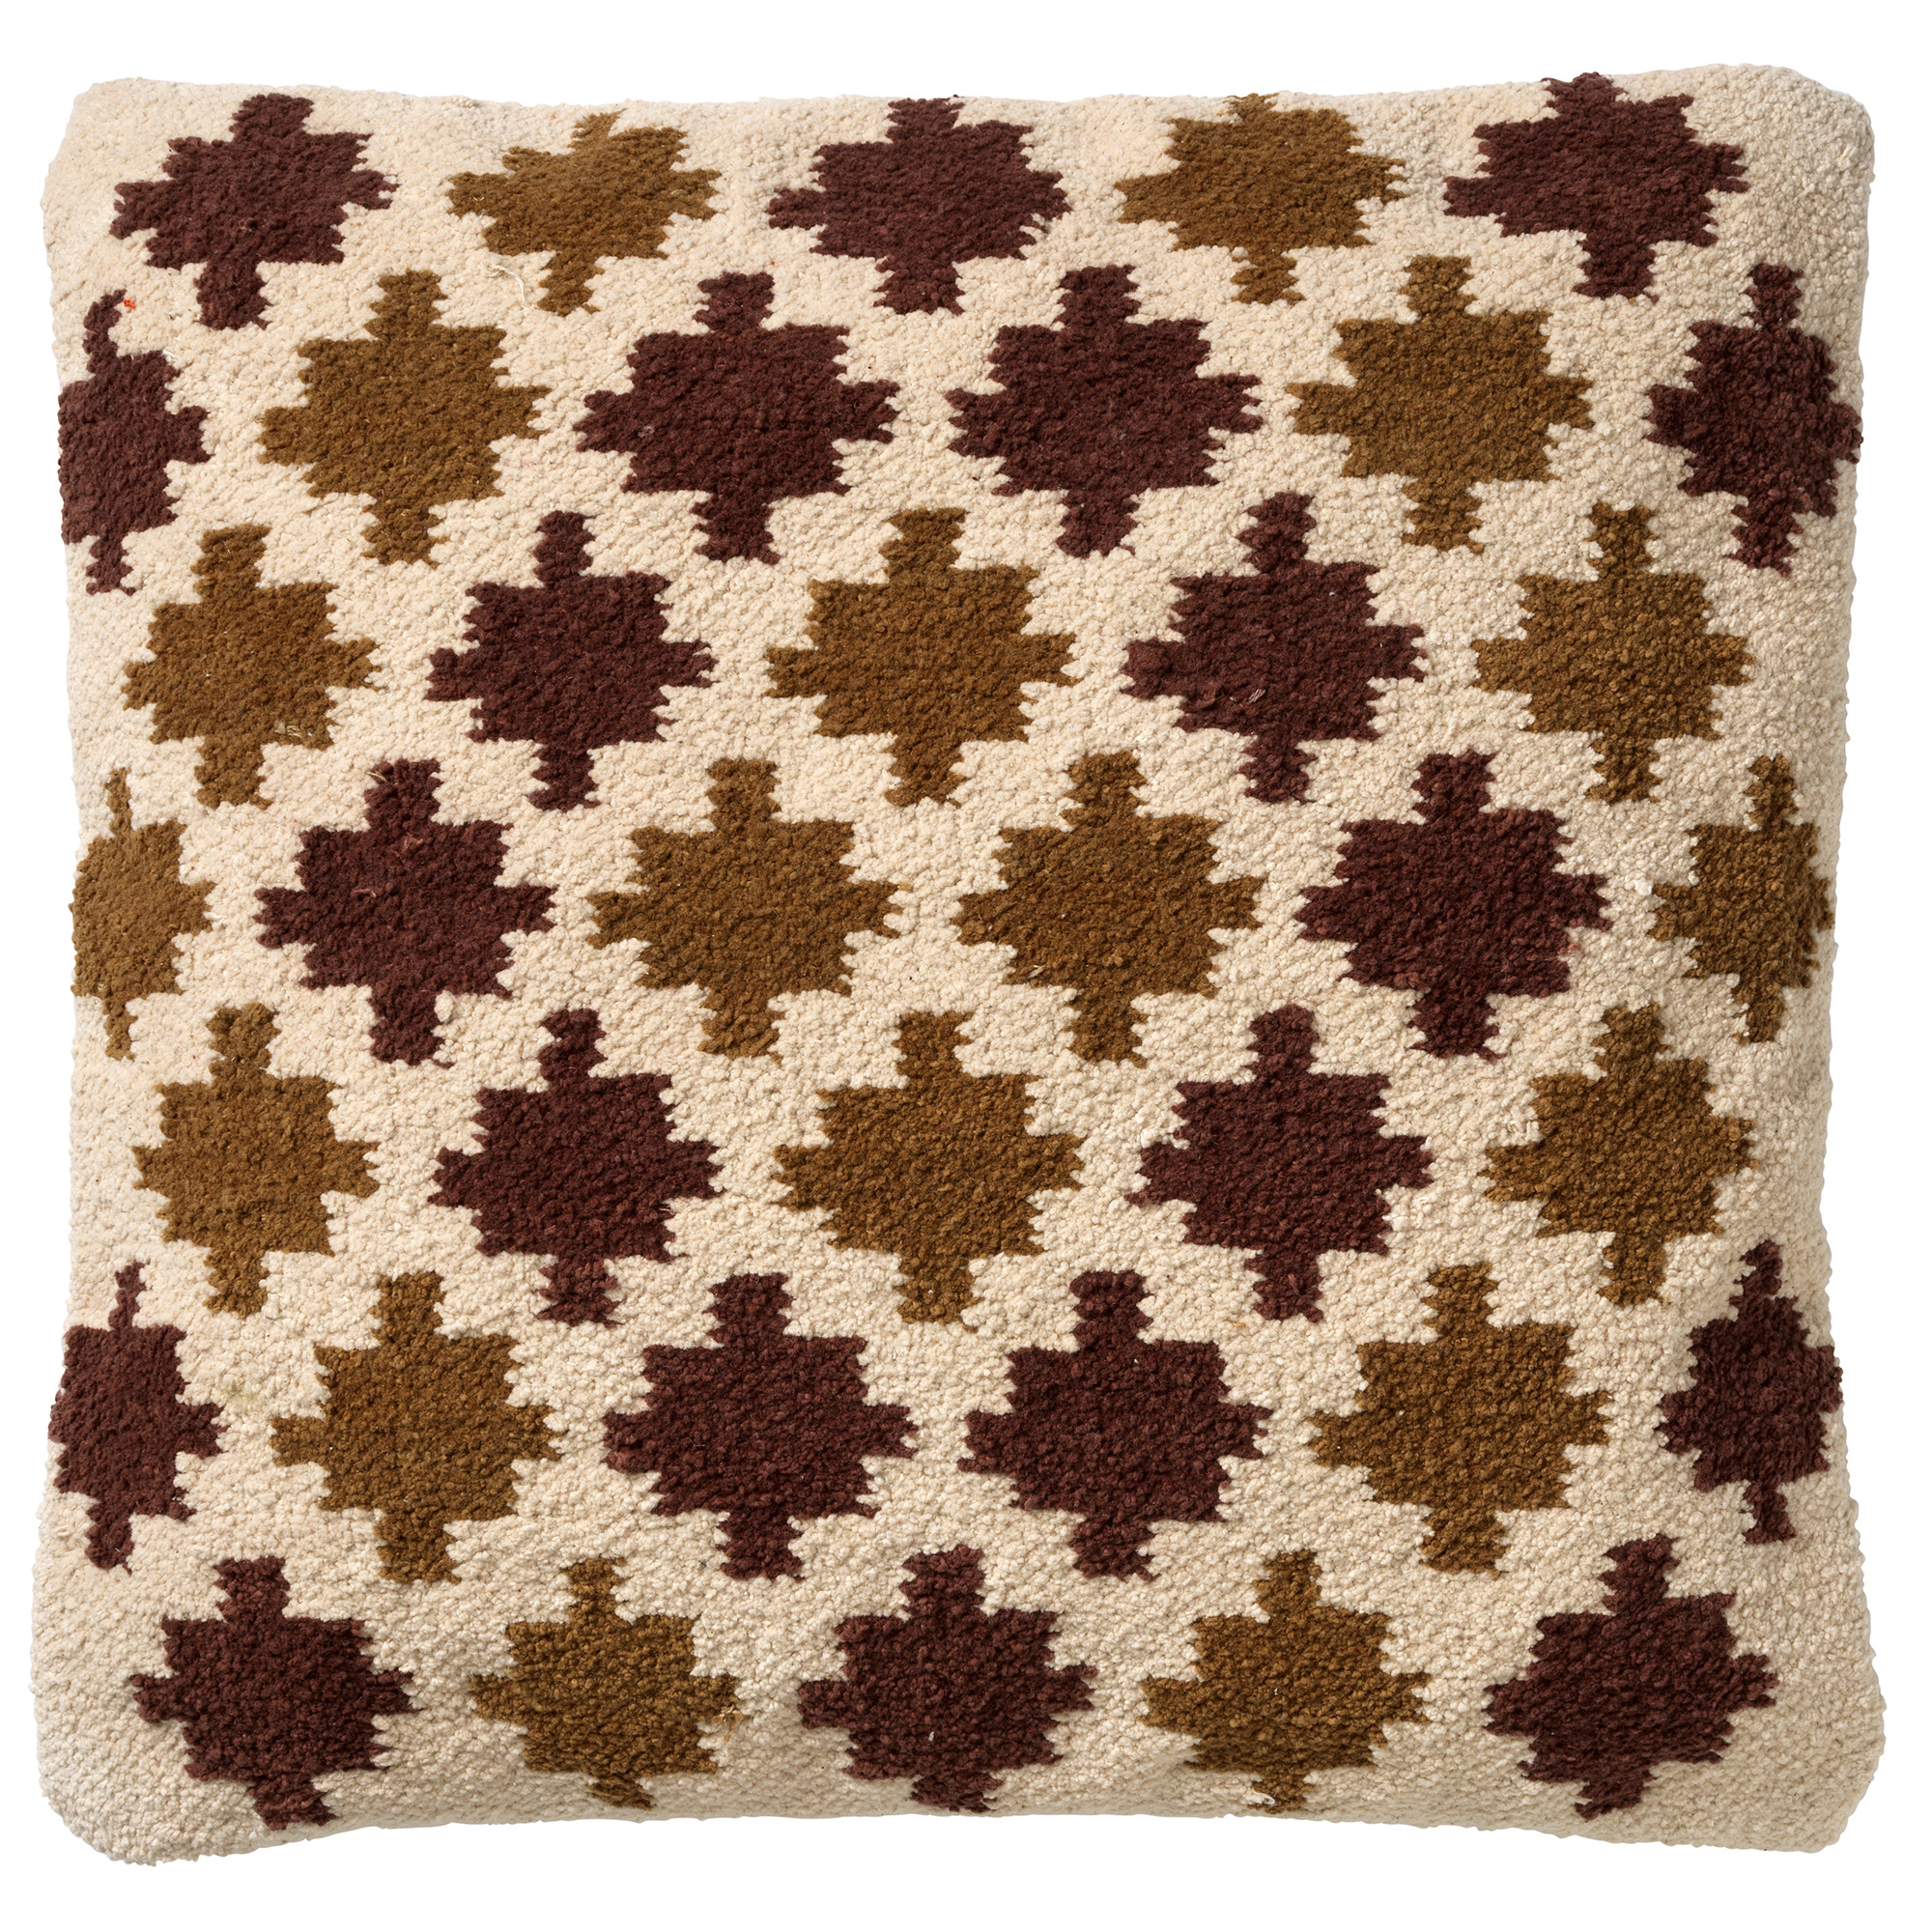 YAEL - Cushion cover 45x45 cm Pumice Stone - beige